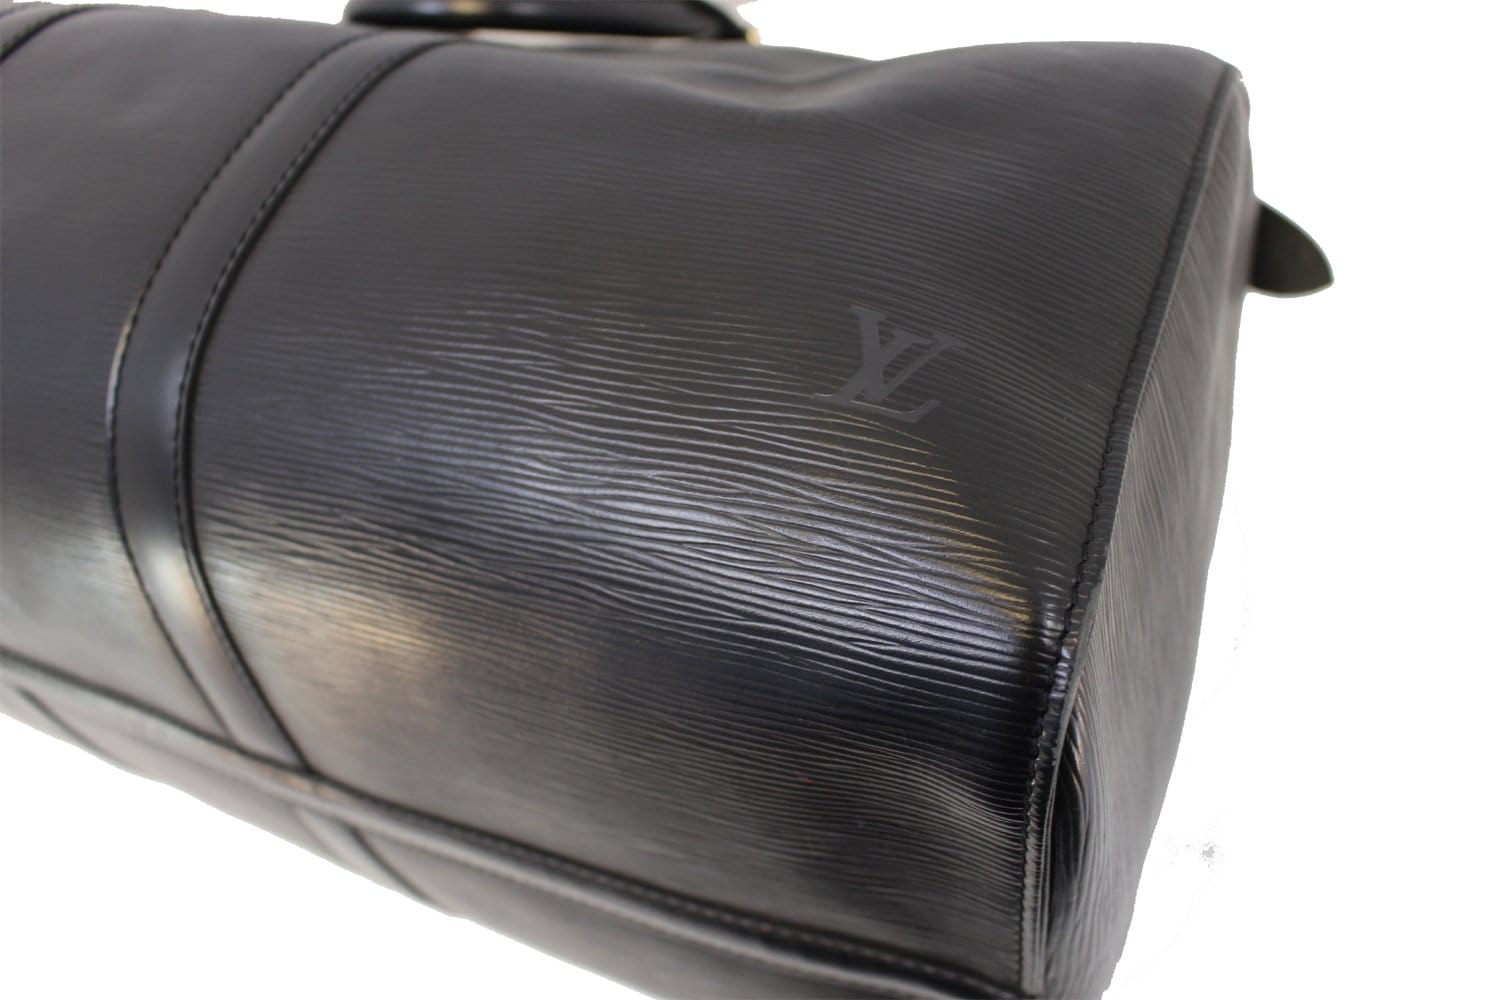 Louis Vuitton Black Epi Leather Noir Keepall 50 Boston Duffle Bag 85lvs427